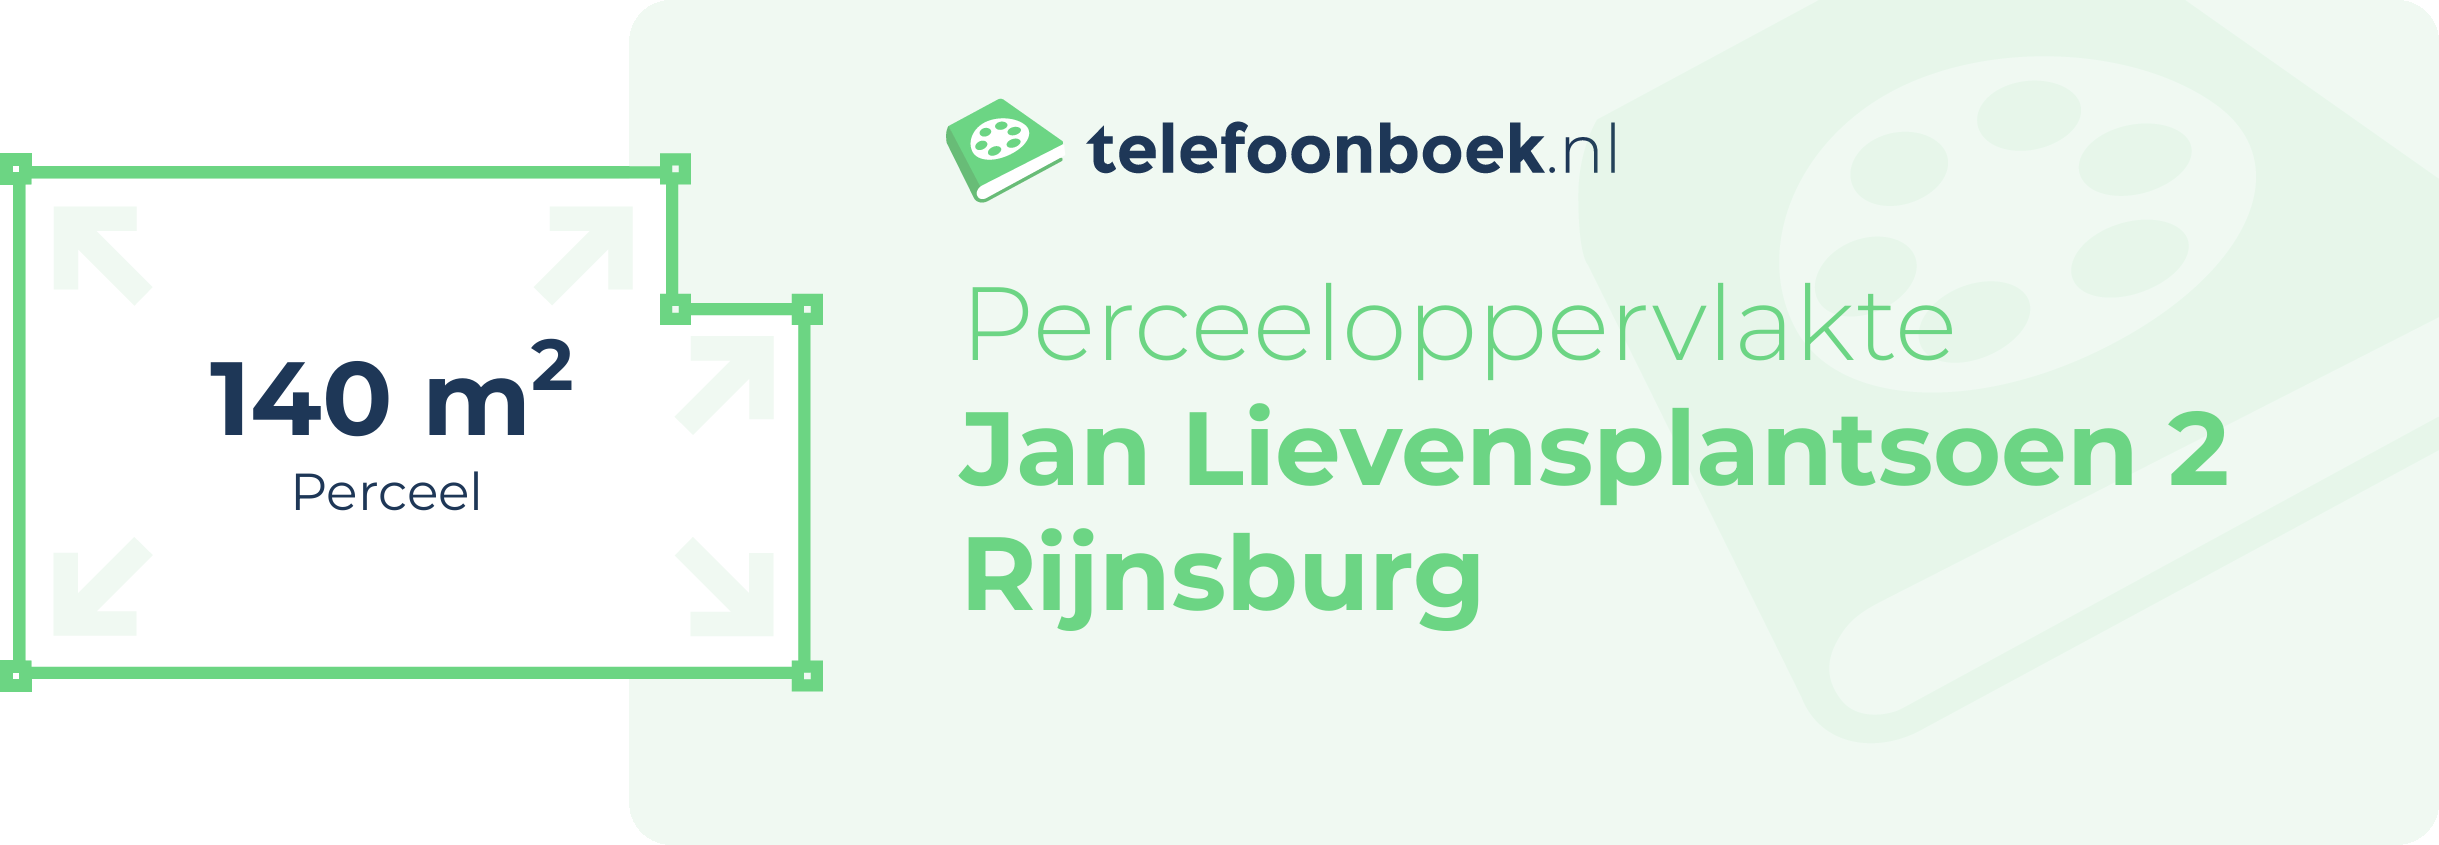 Perceeloppervlakte Jan Lievensplantsoen 2 Rijnsburg